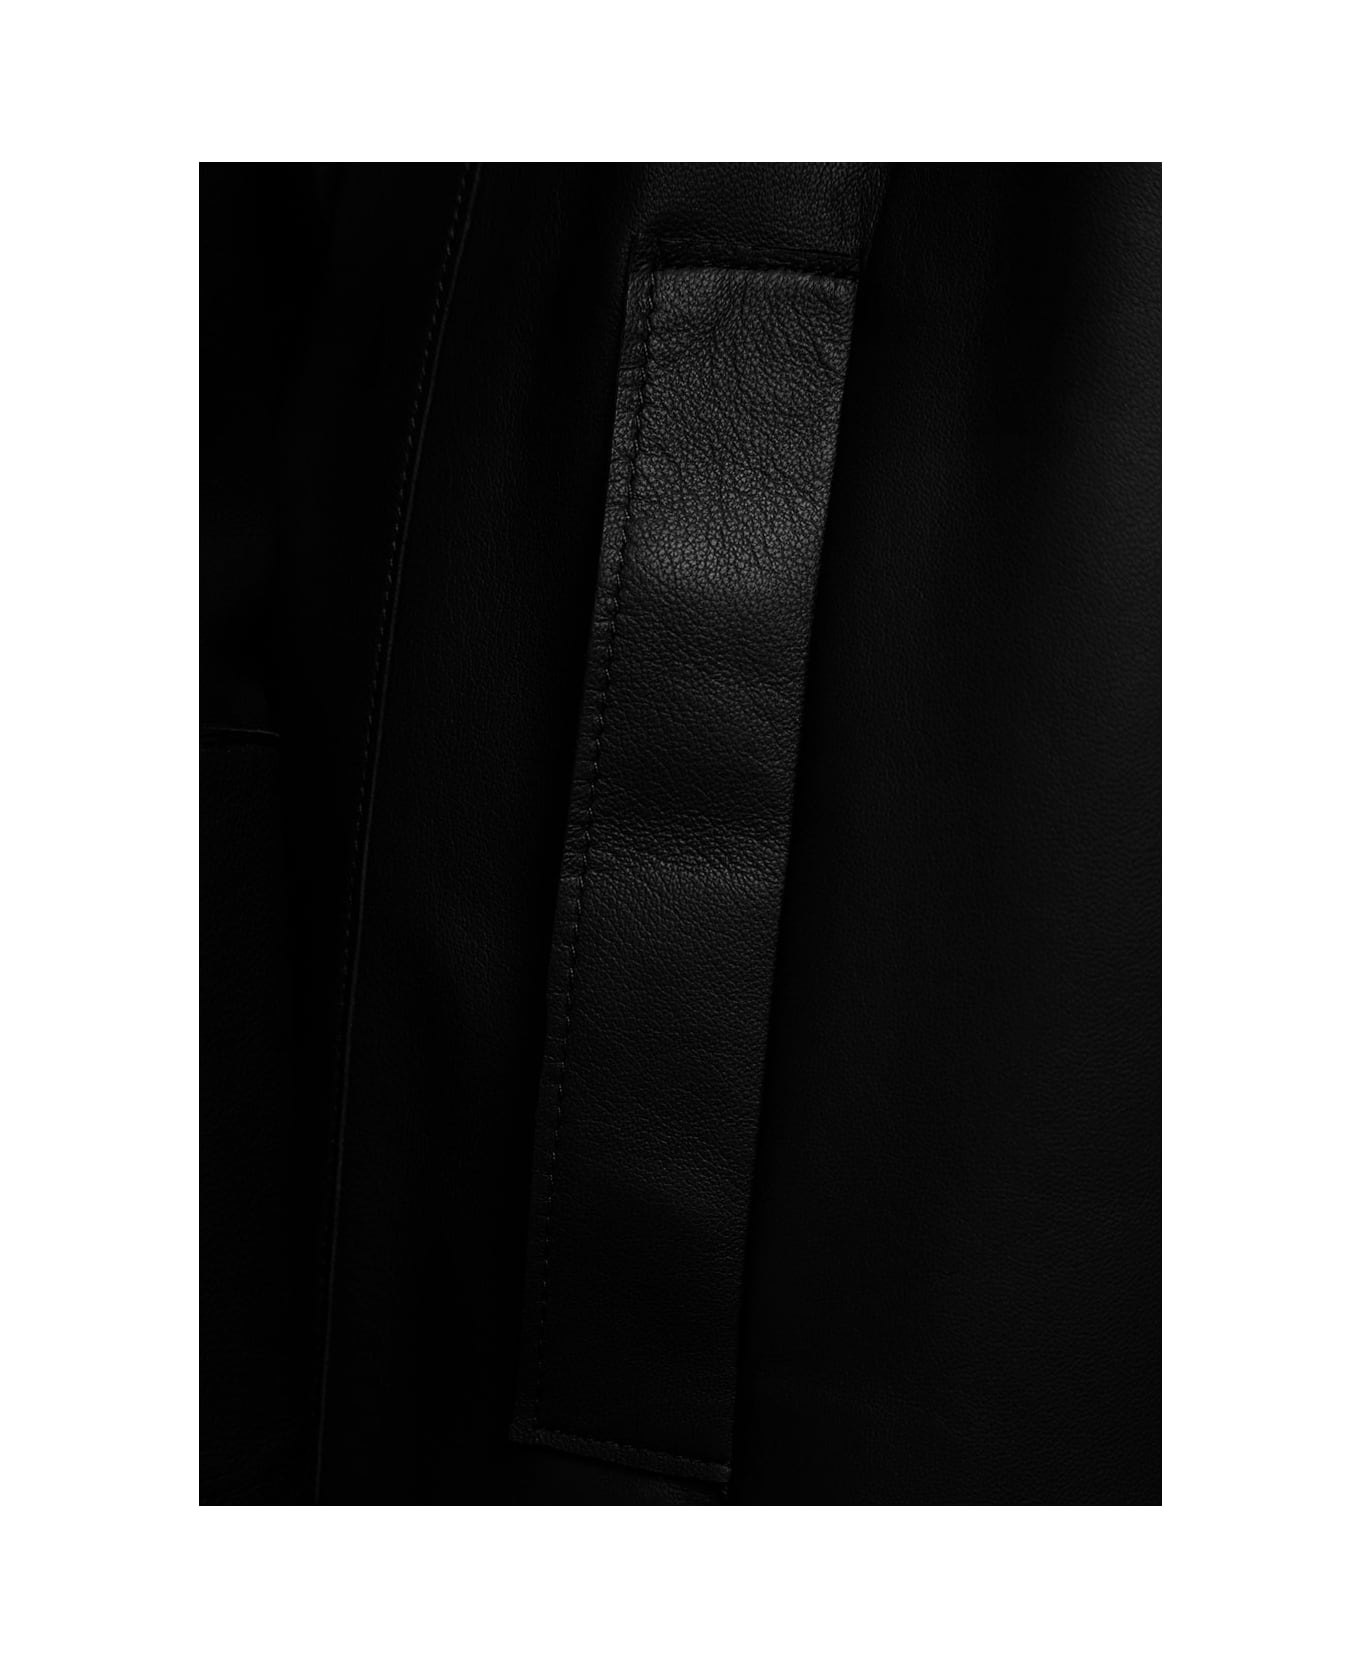 Antonelli Elia Leather Coat - Black